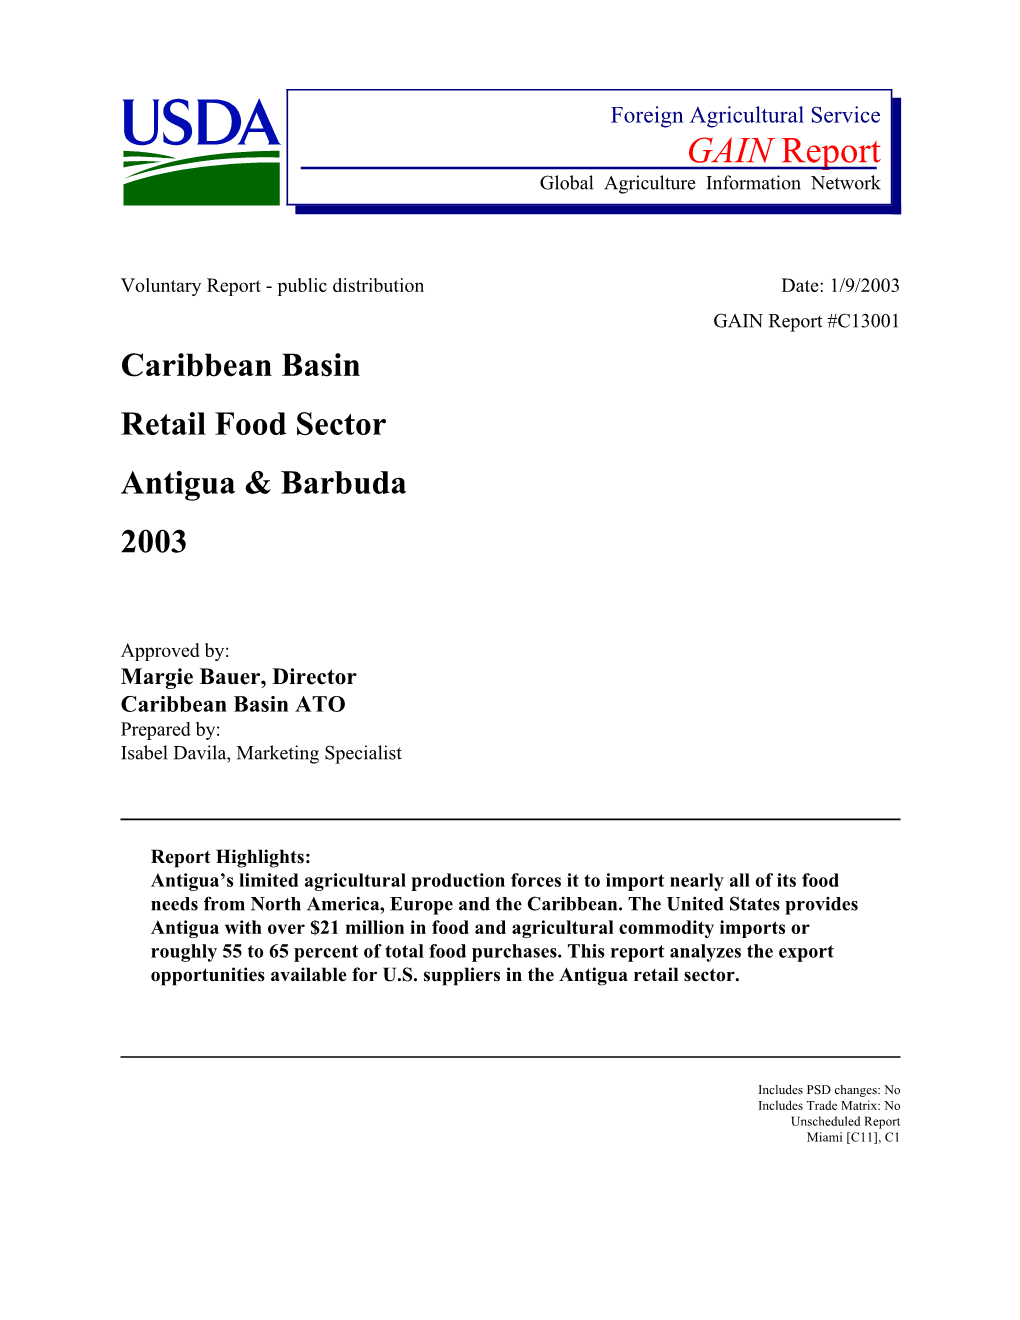 Caribbean Basin Retail Food Sector Antigua & Barbuda